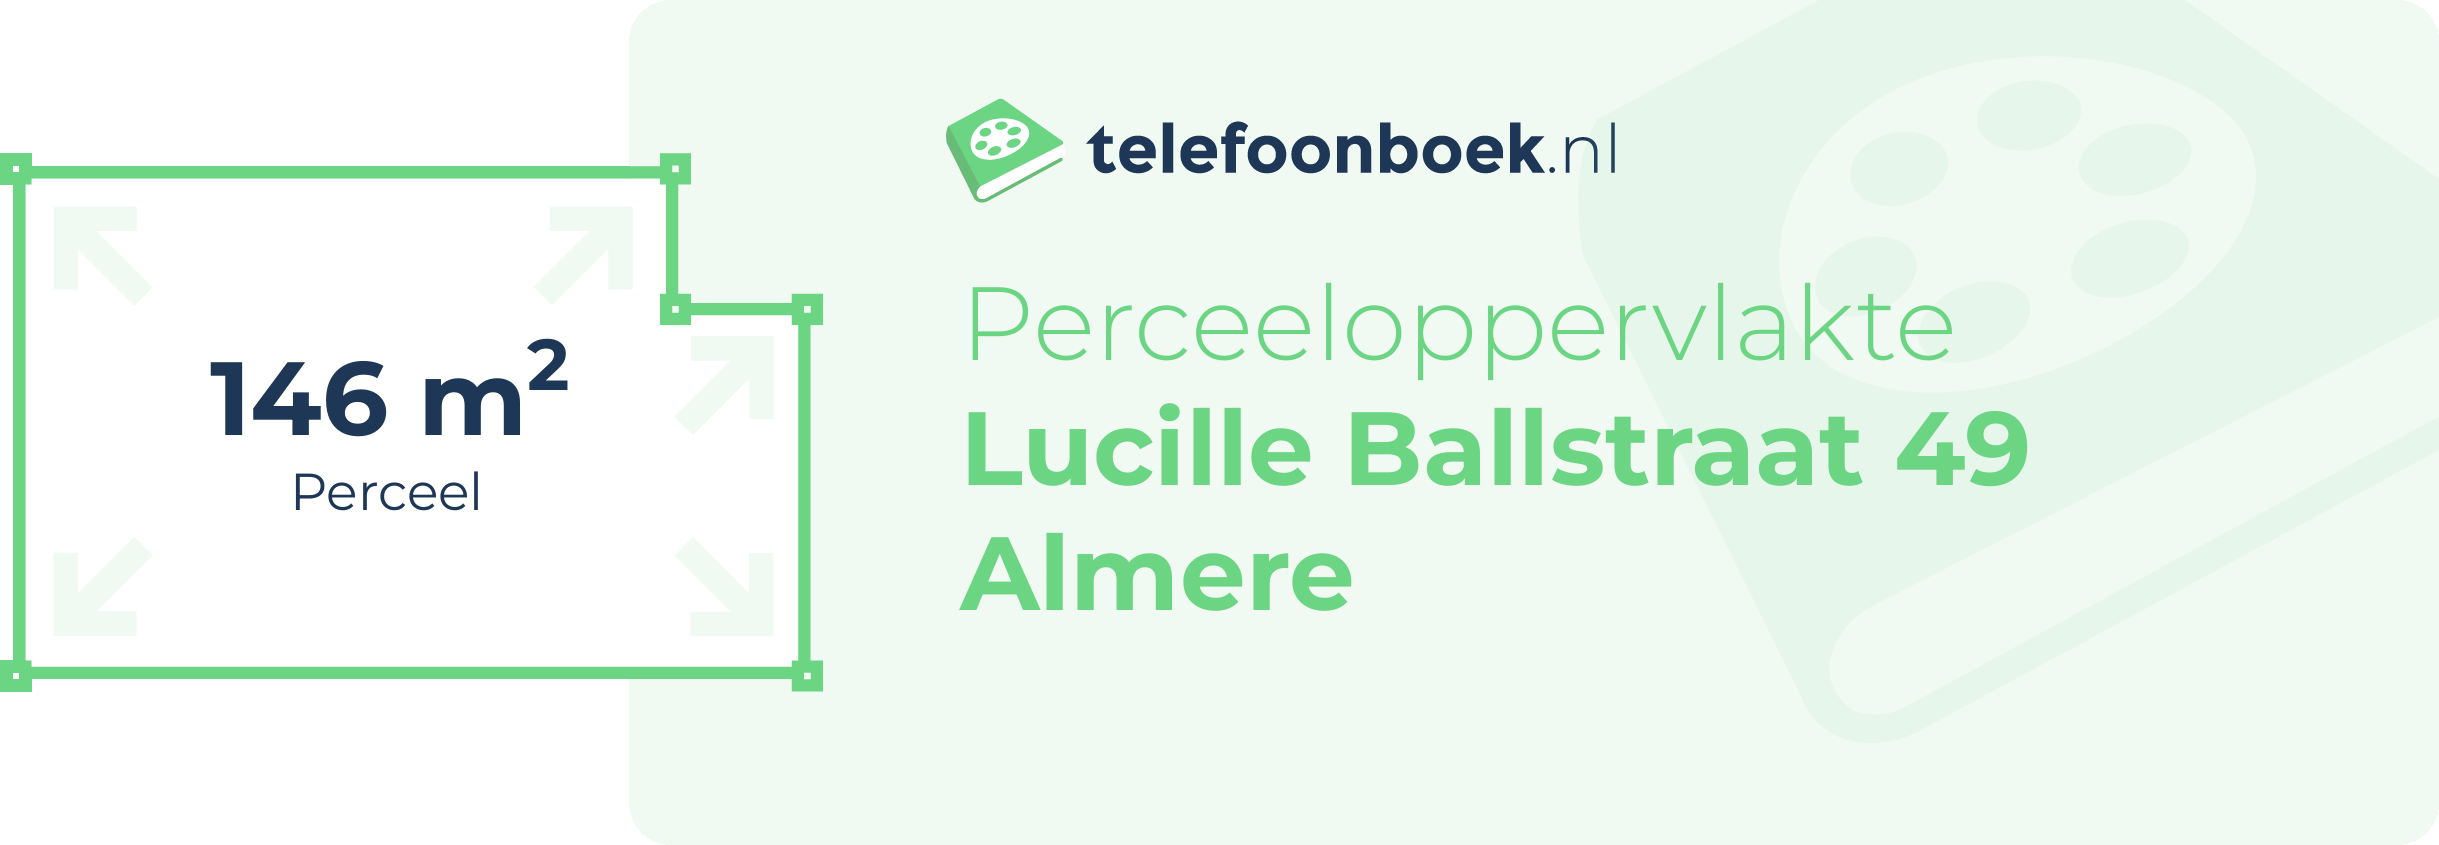 Perceeloppervlakte Lucille Ballstraat 49 Almere